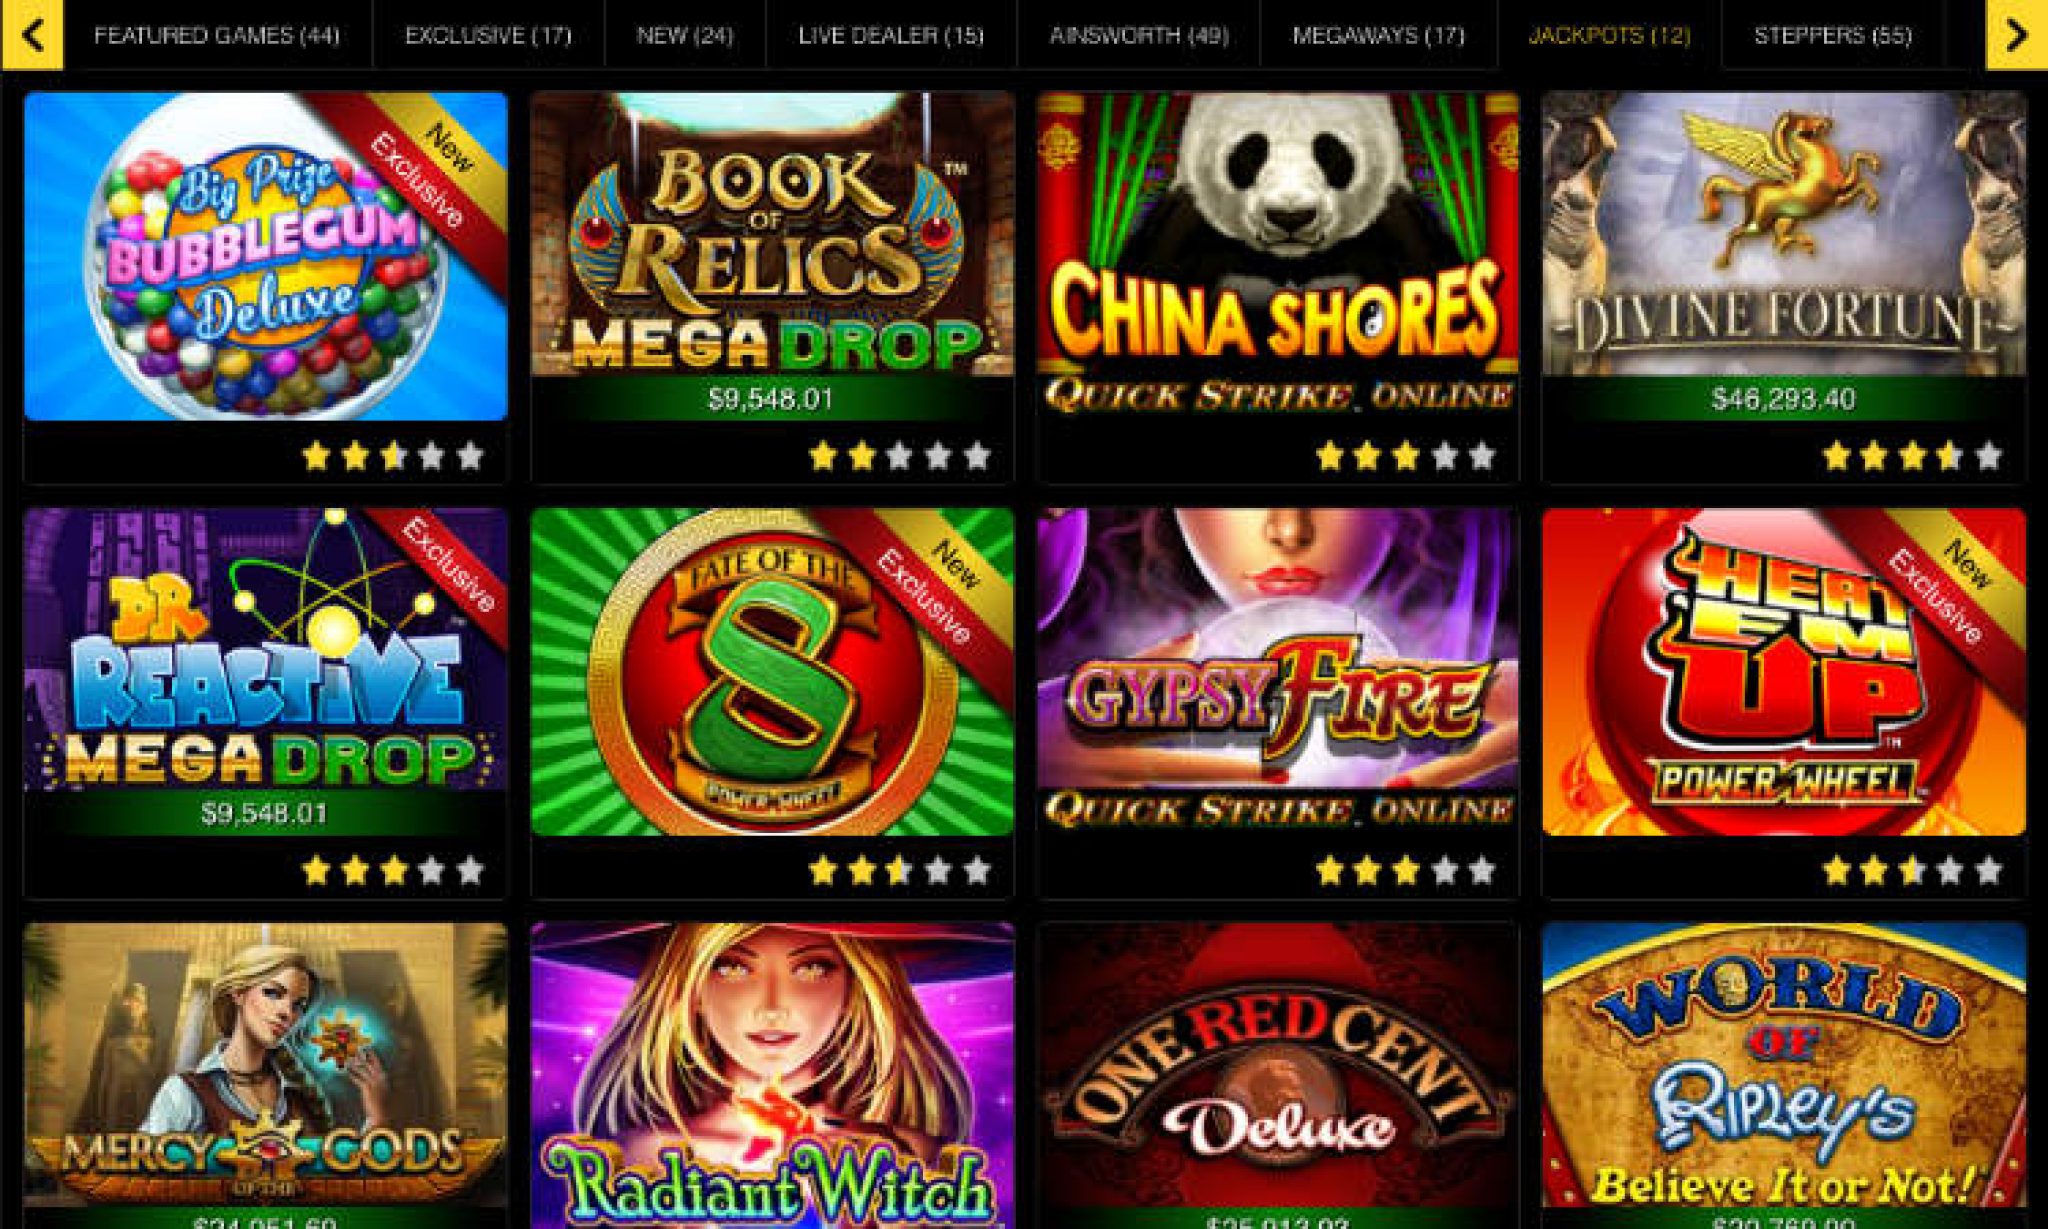 golden nugget online casino games